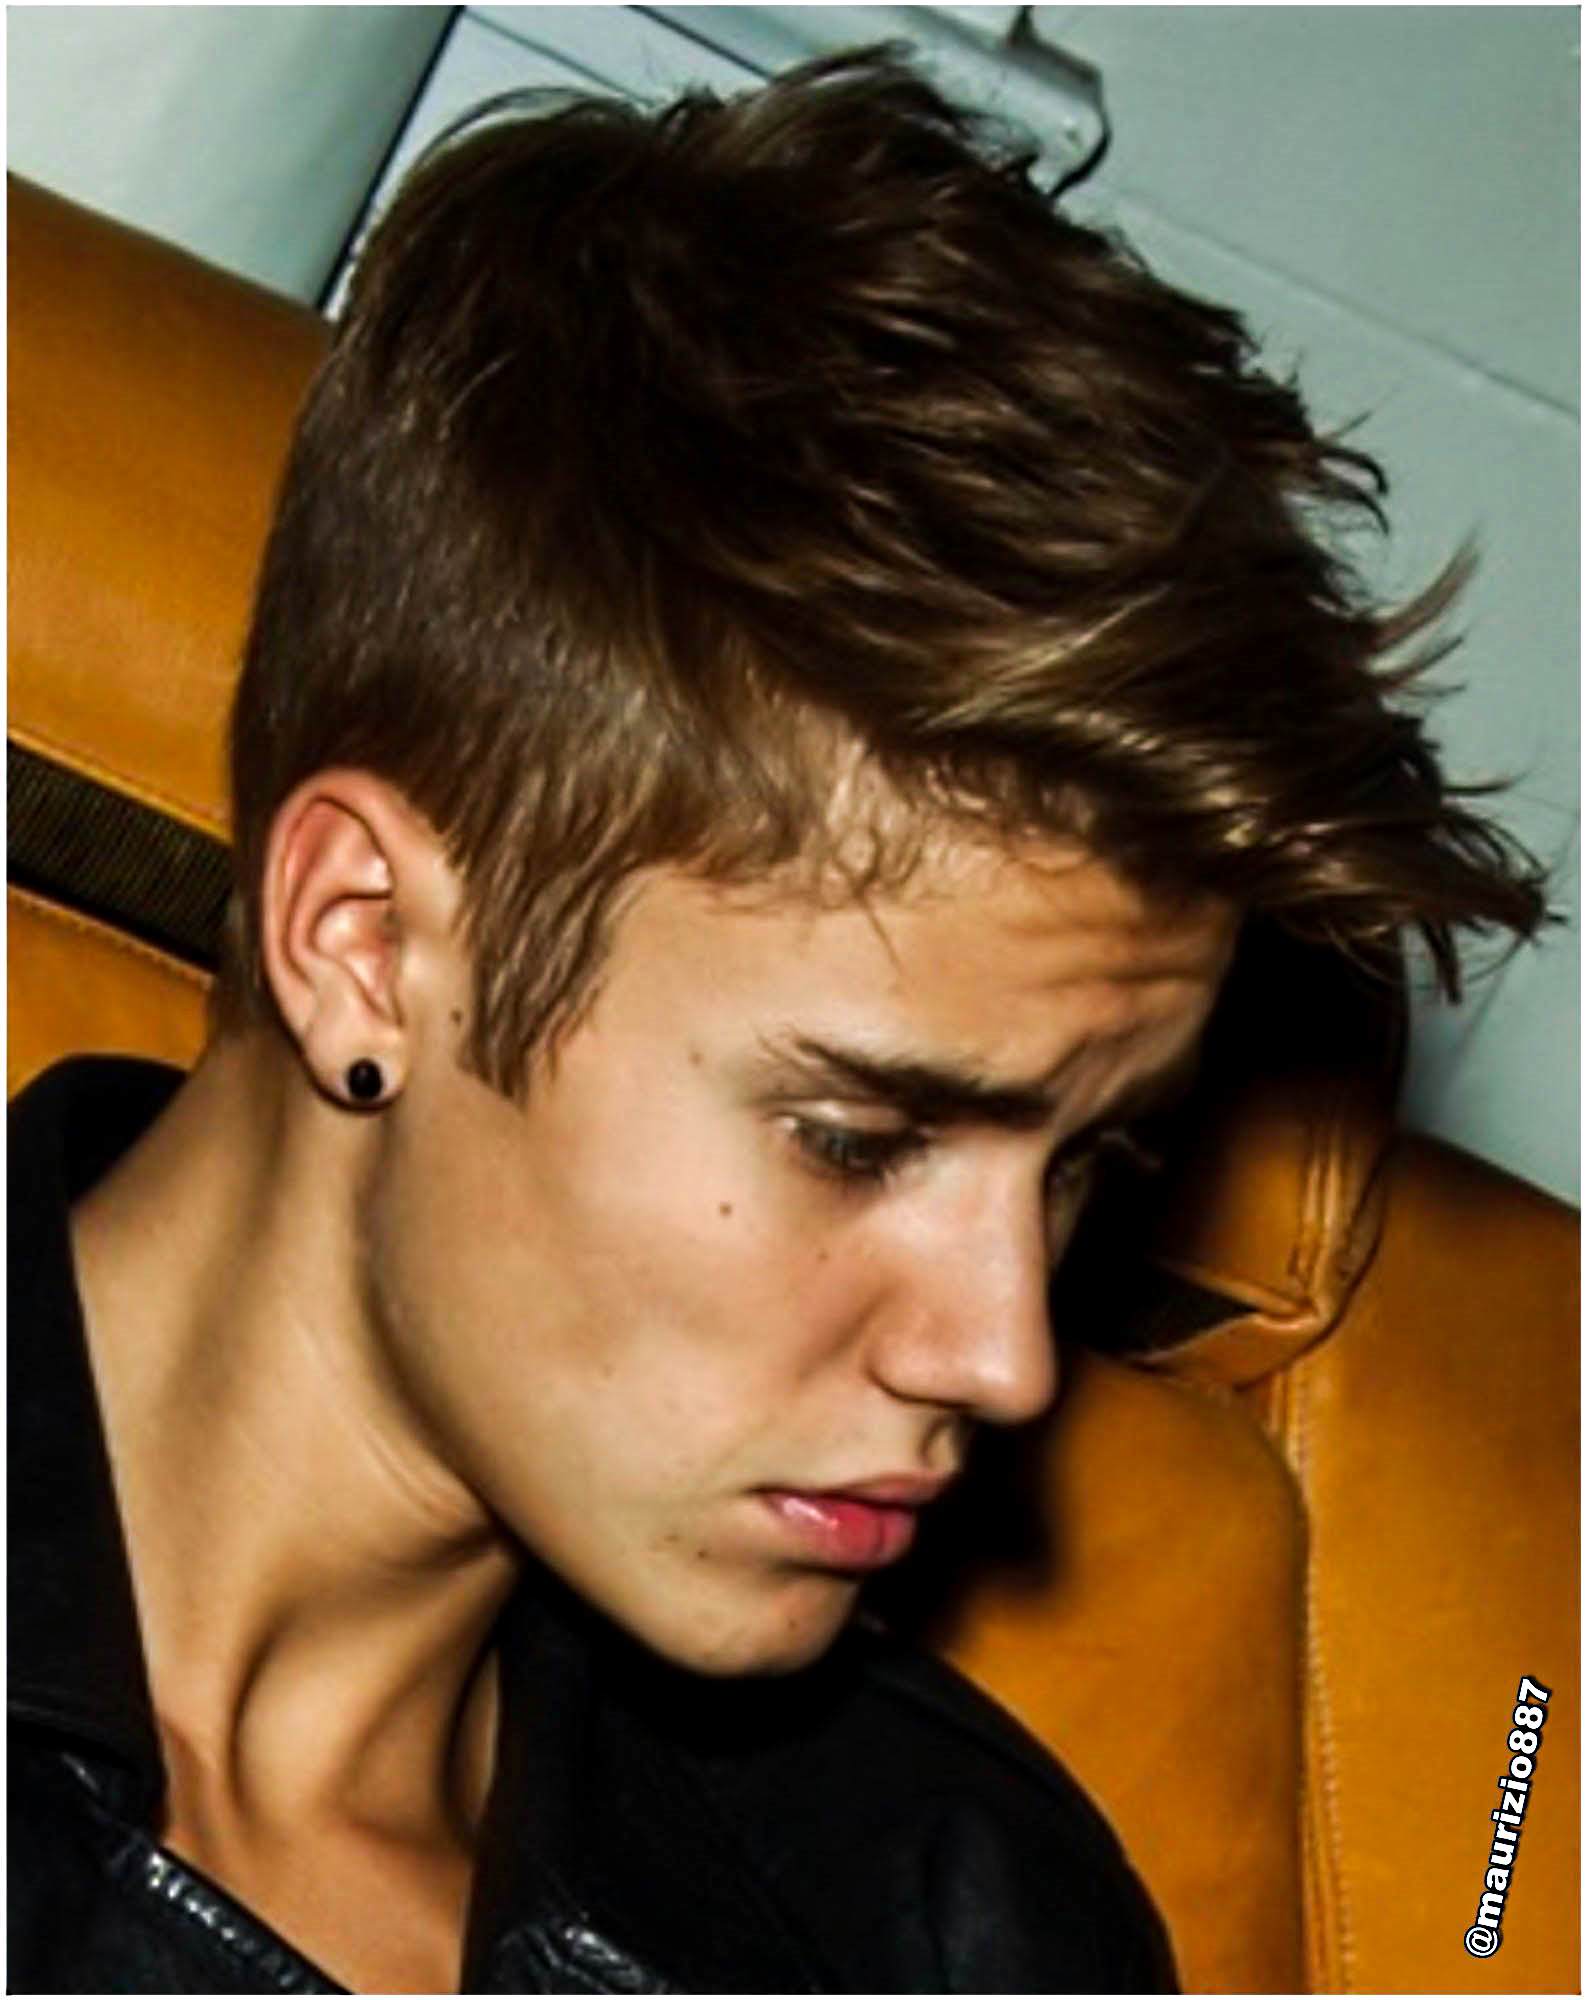 justin bieber adidas neo 2013 - Justin Bieber Photo (35178791) - Fanpop